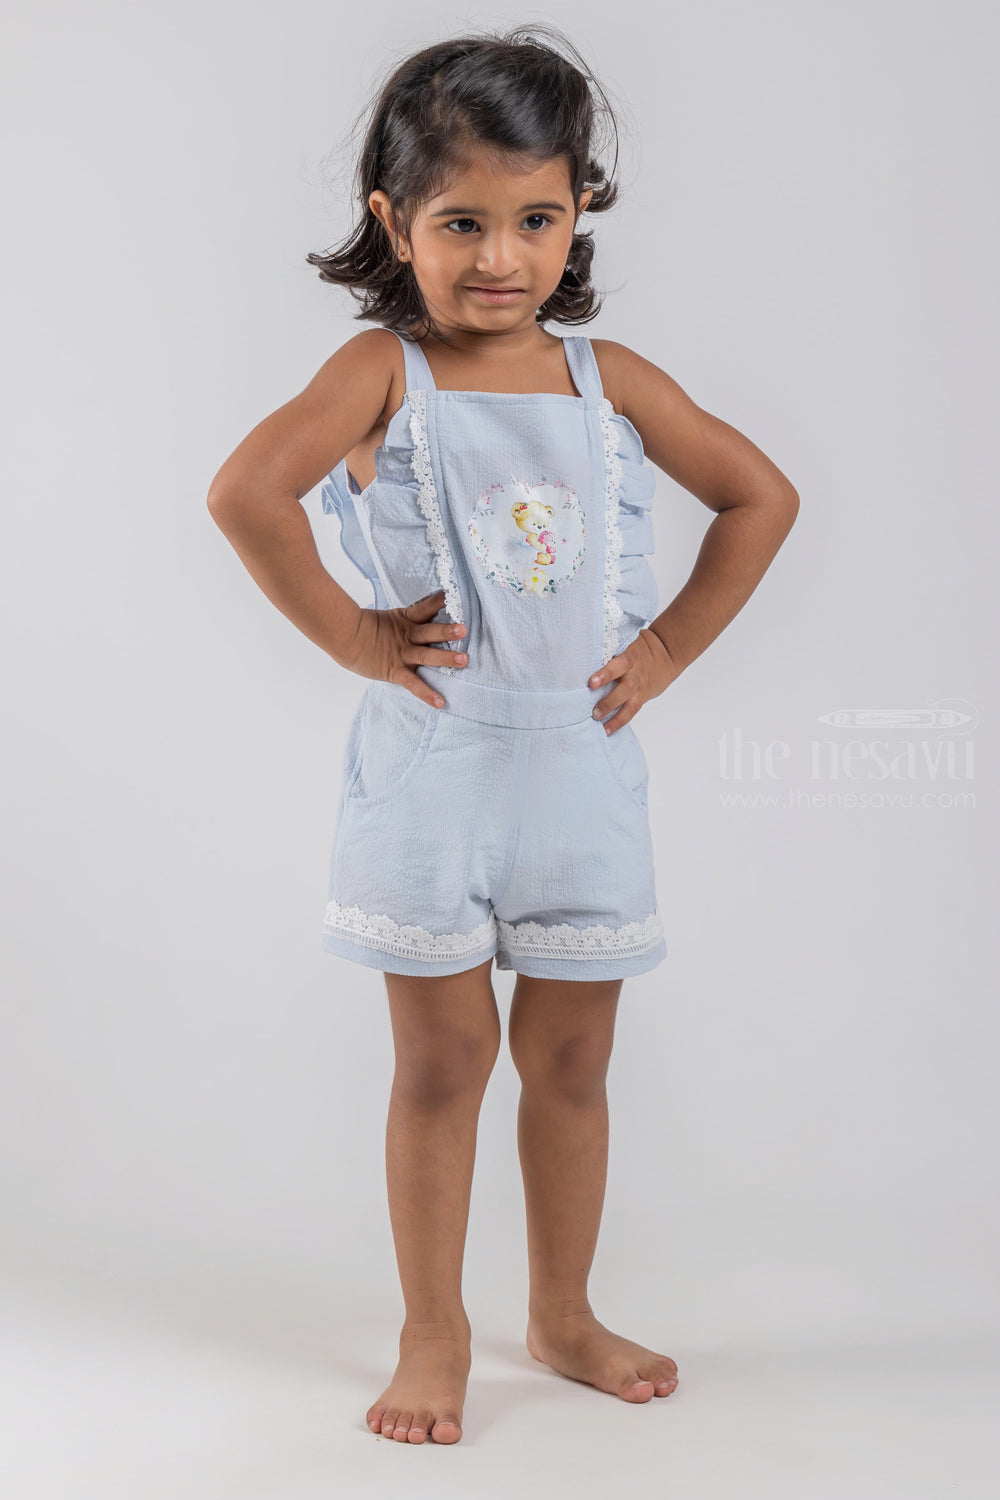 The Nesavu Baby Dungarees Cute Teddy Bear Printed Sleeveless Blue Top and Blue Trouser Set for Baby Girls psr silks Nesavu